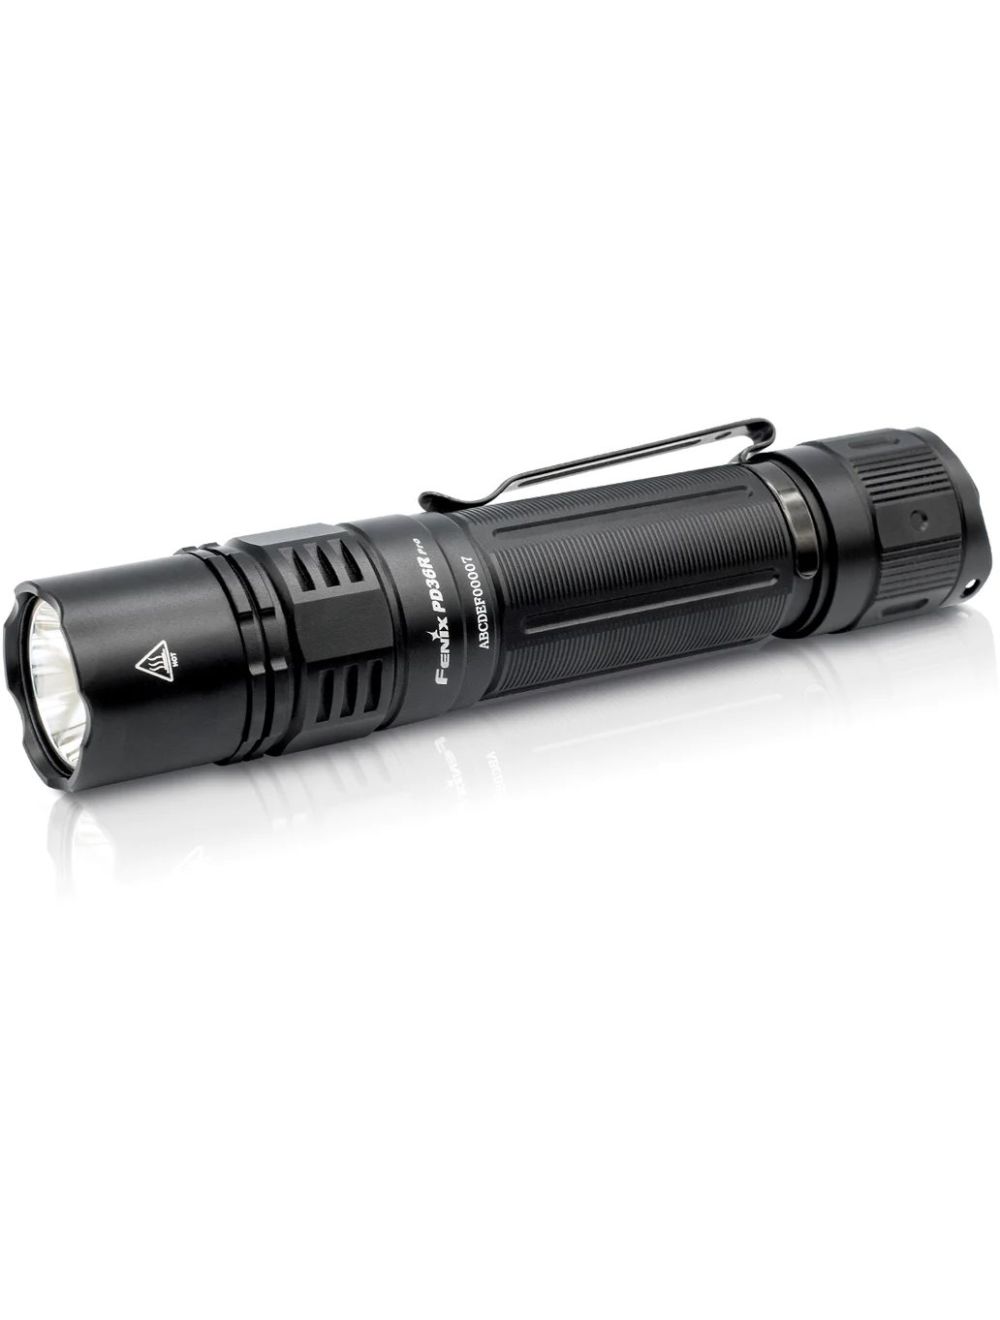 PD36R Pro 2800 Lumens Flashlight